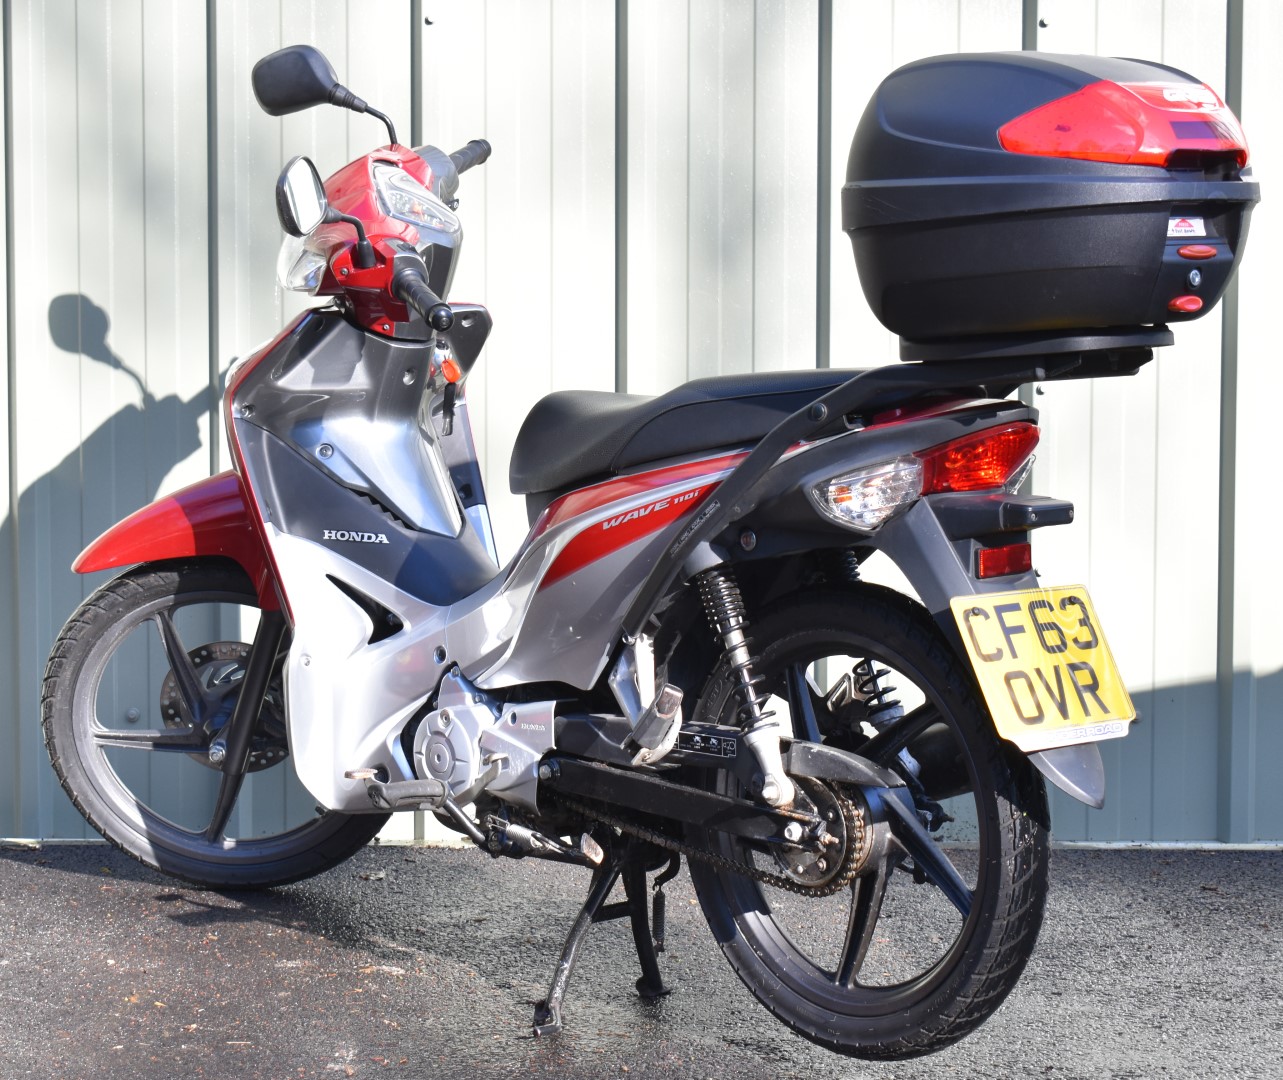 2014 Honda Wave four stroke 109cc motorcycle or scooter model AFS 110 2SHC, registration number CF63 - Image 17 of 17